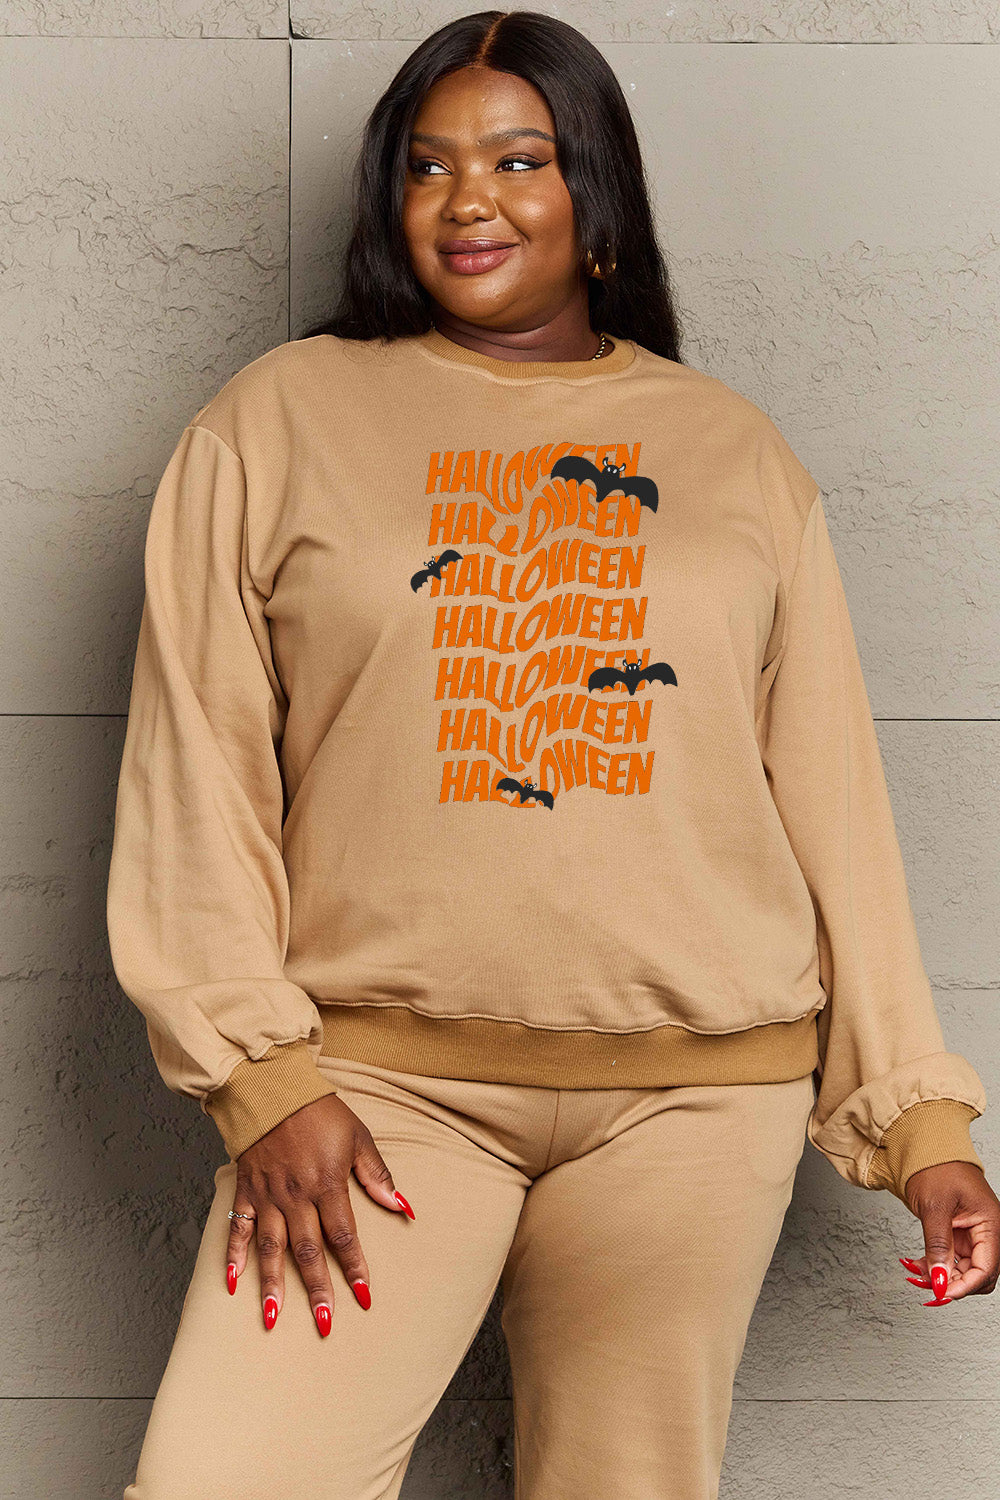 Simply Love Full Size HALLOWEEN Graphic Sweatshirt